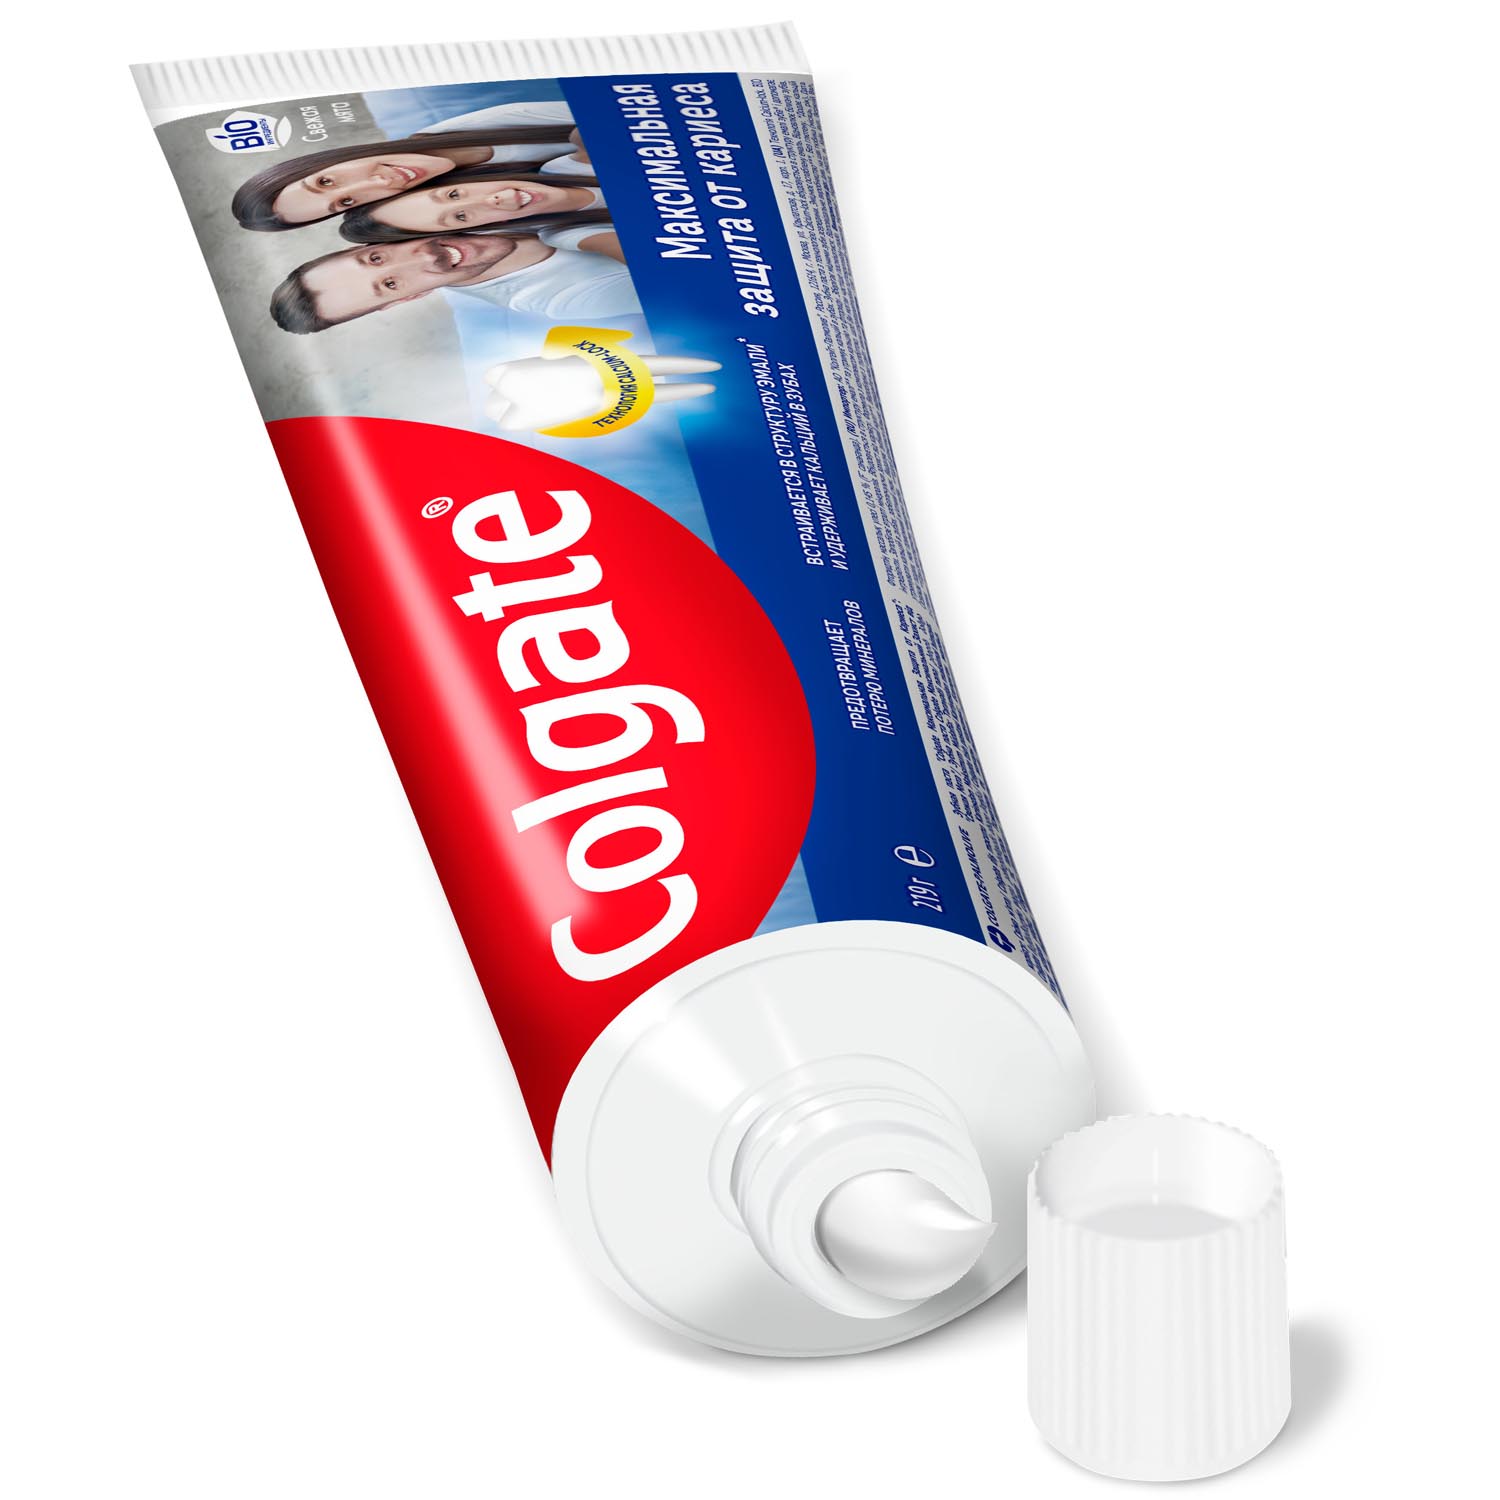 Зубная паста Colgate Максимальная Защита от кариеса Свежая мята 150 мл - фото 2